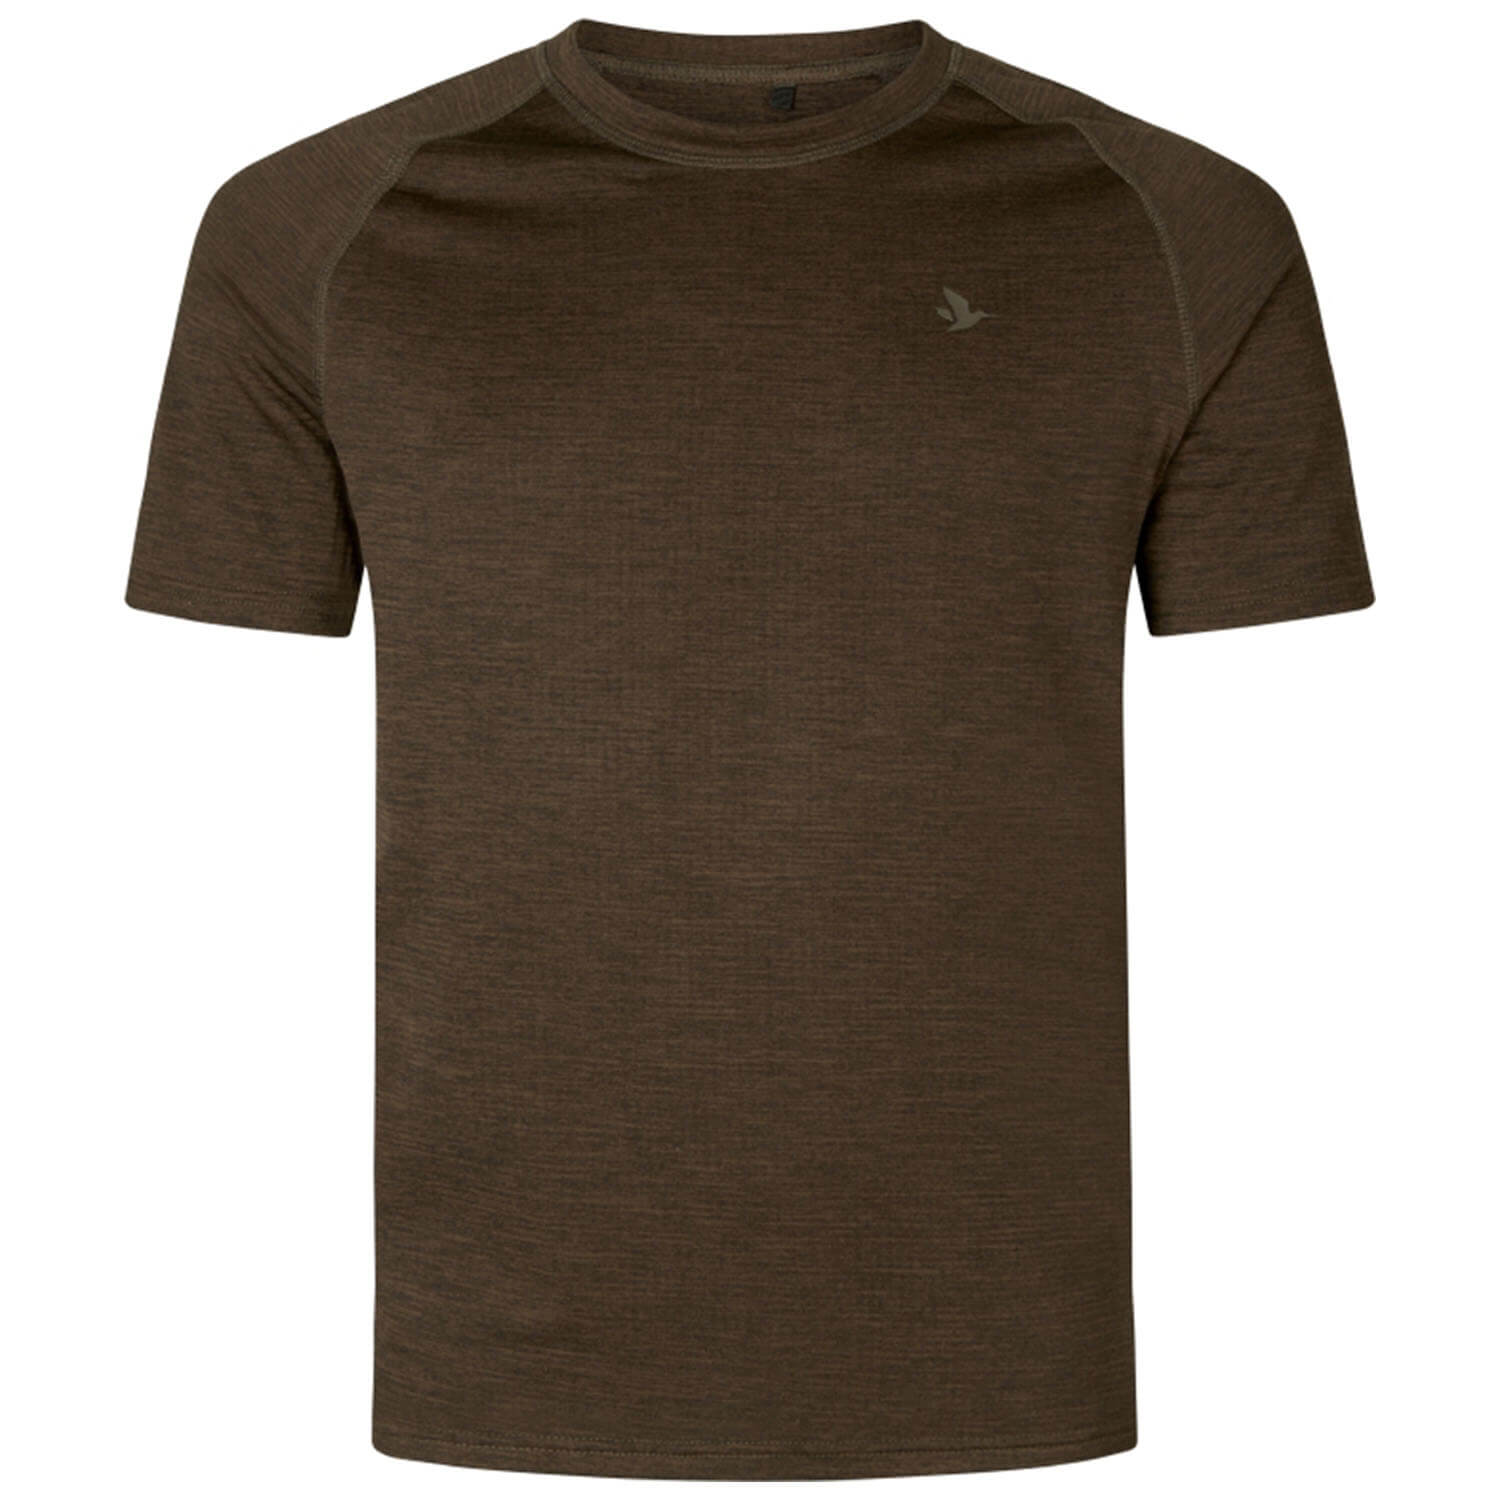  Seeland Active T-shirt (Demitasse bruin) - Jachtshirts